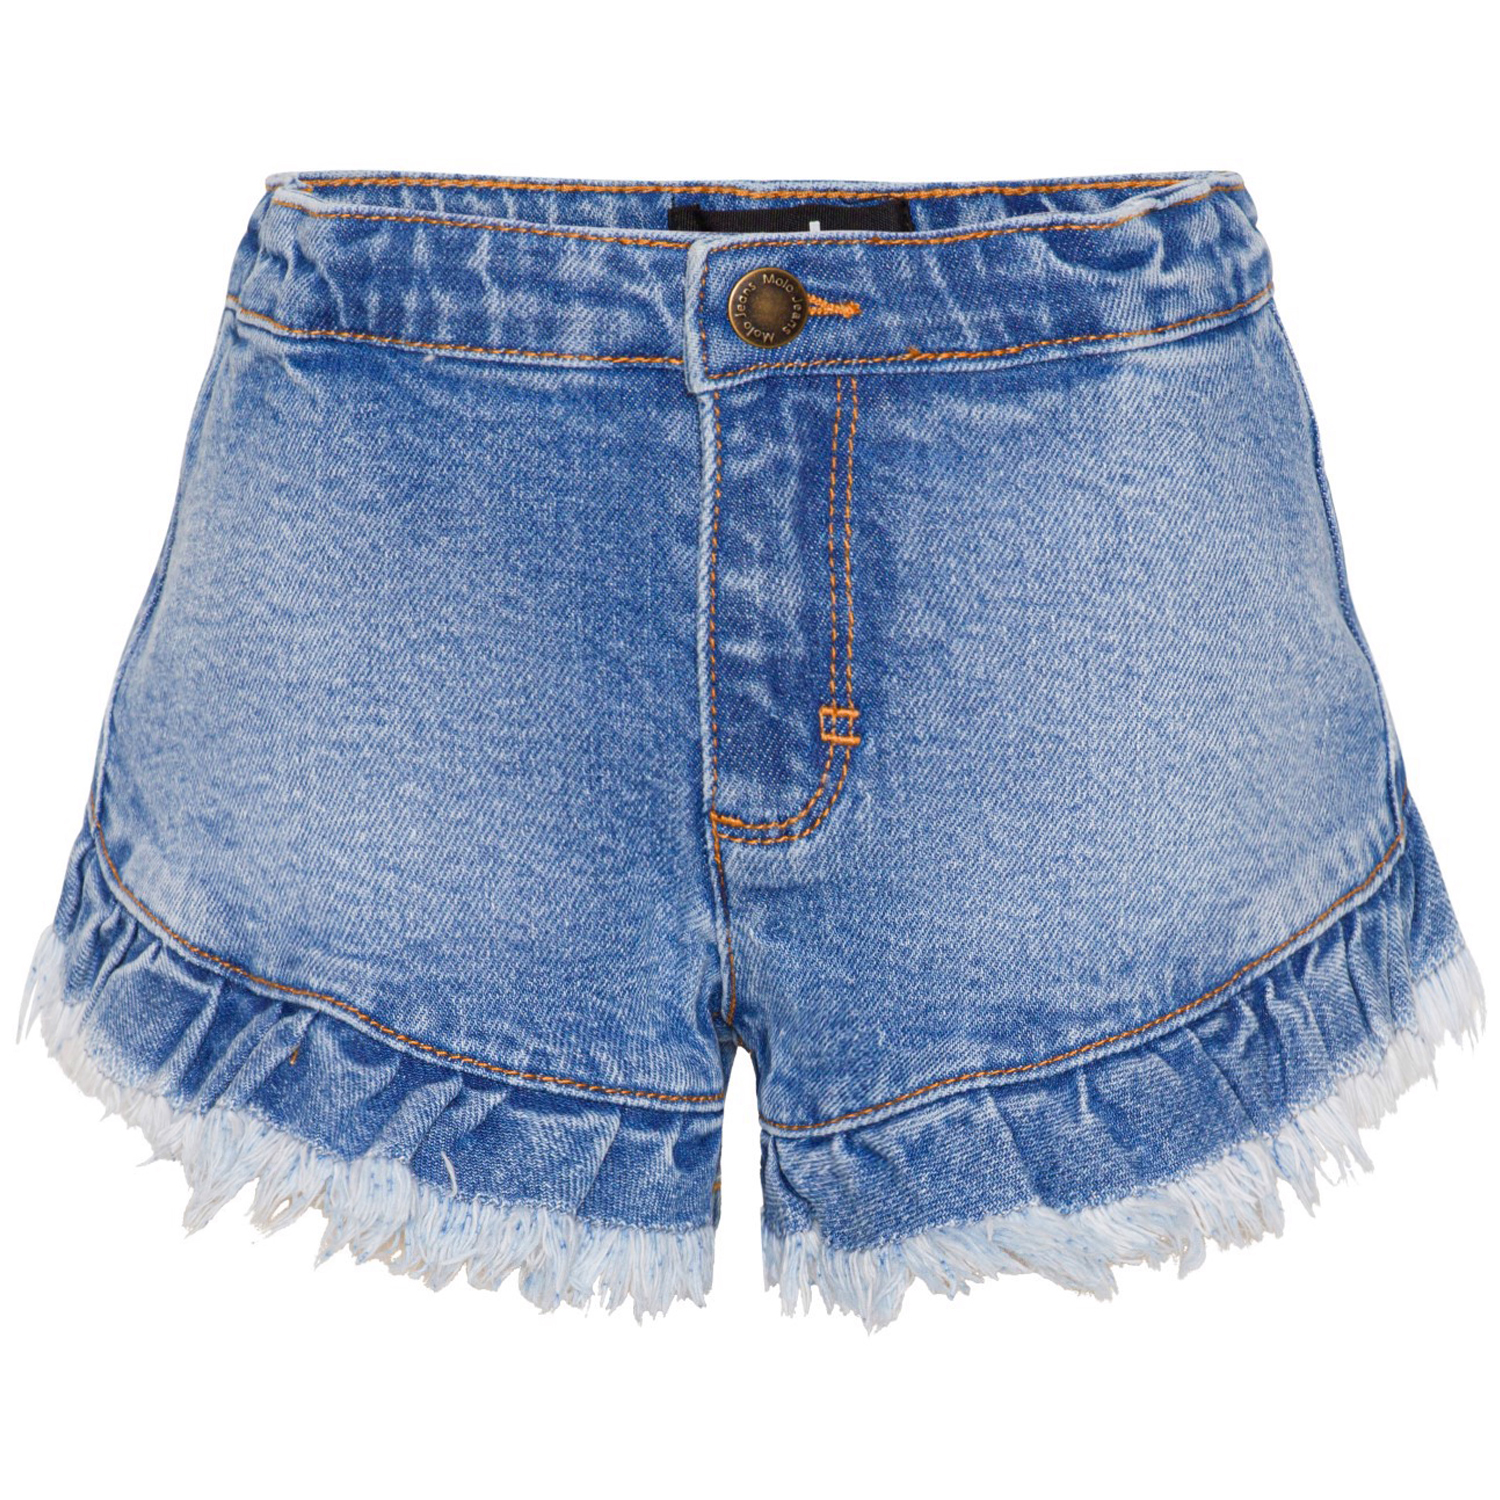 Agnetha - Washed Denim Blue - Blue denim shorts with ruffle detail 